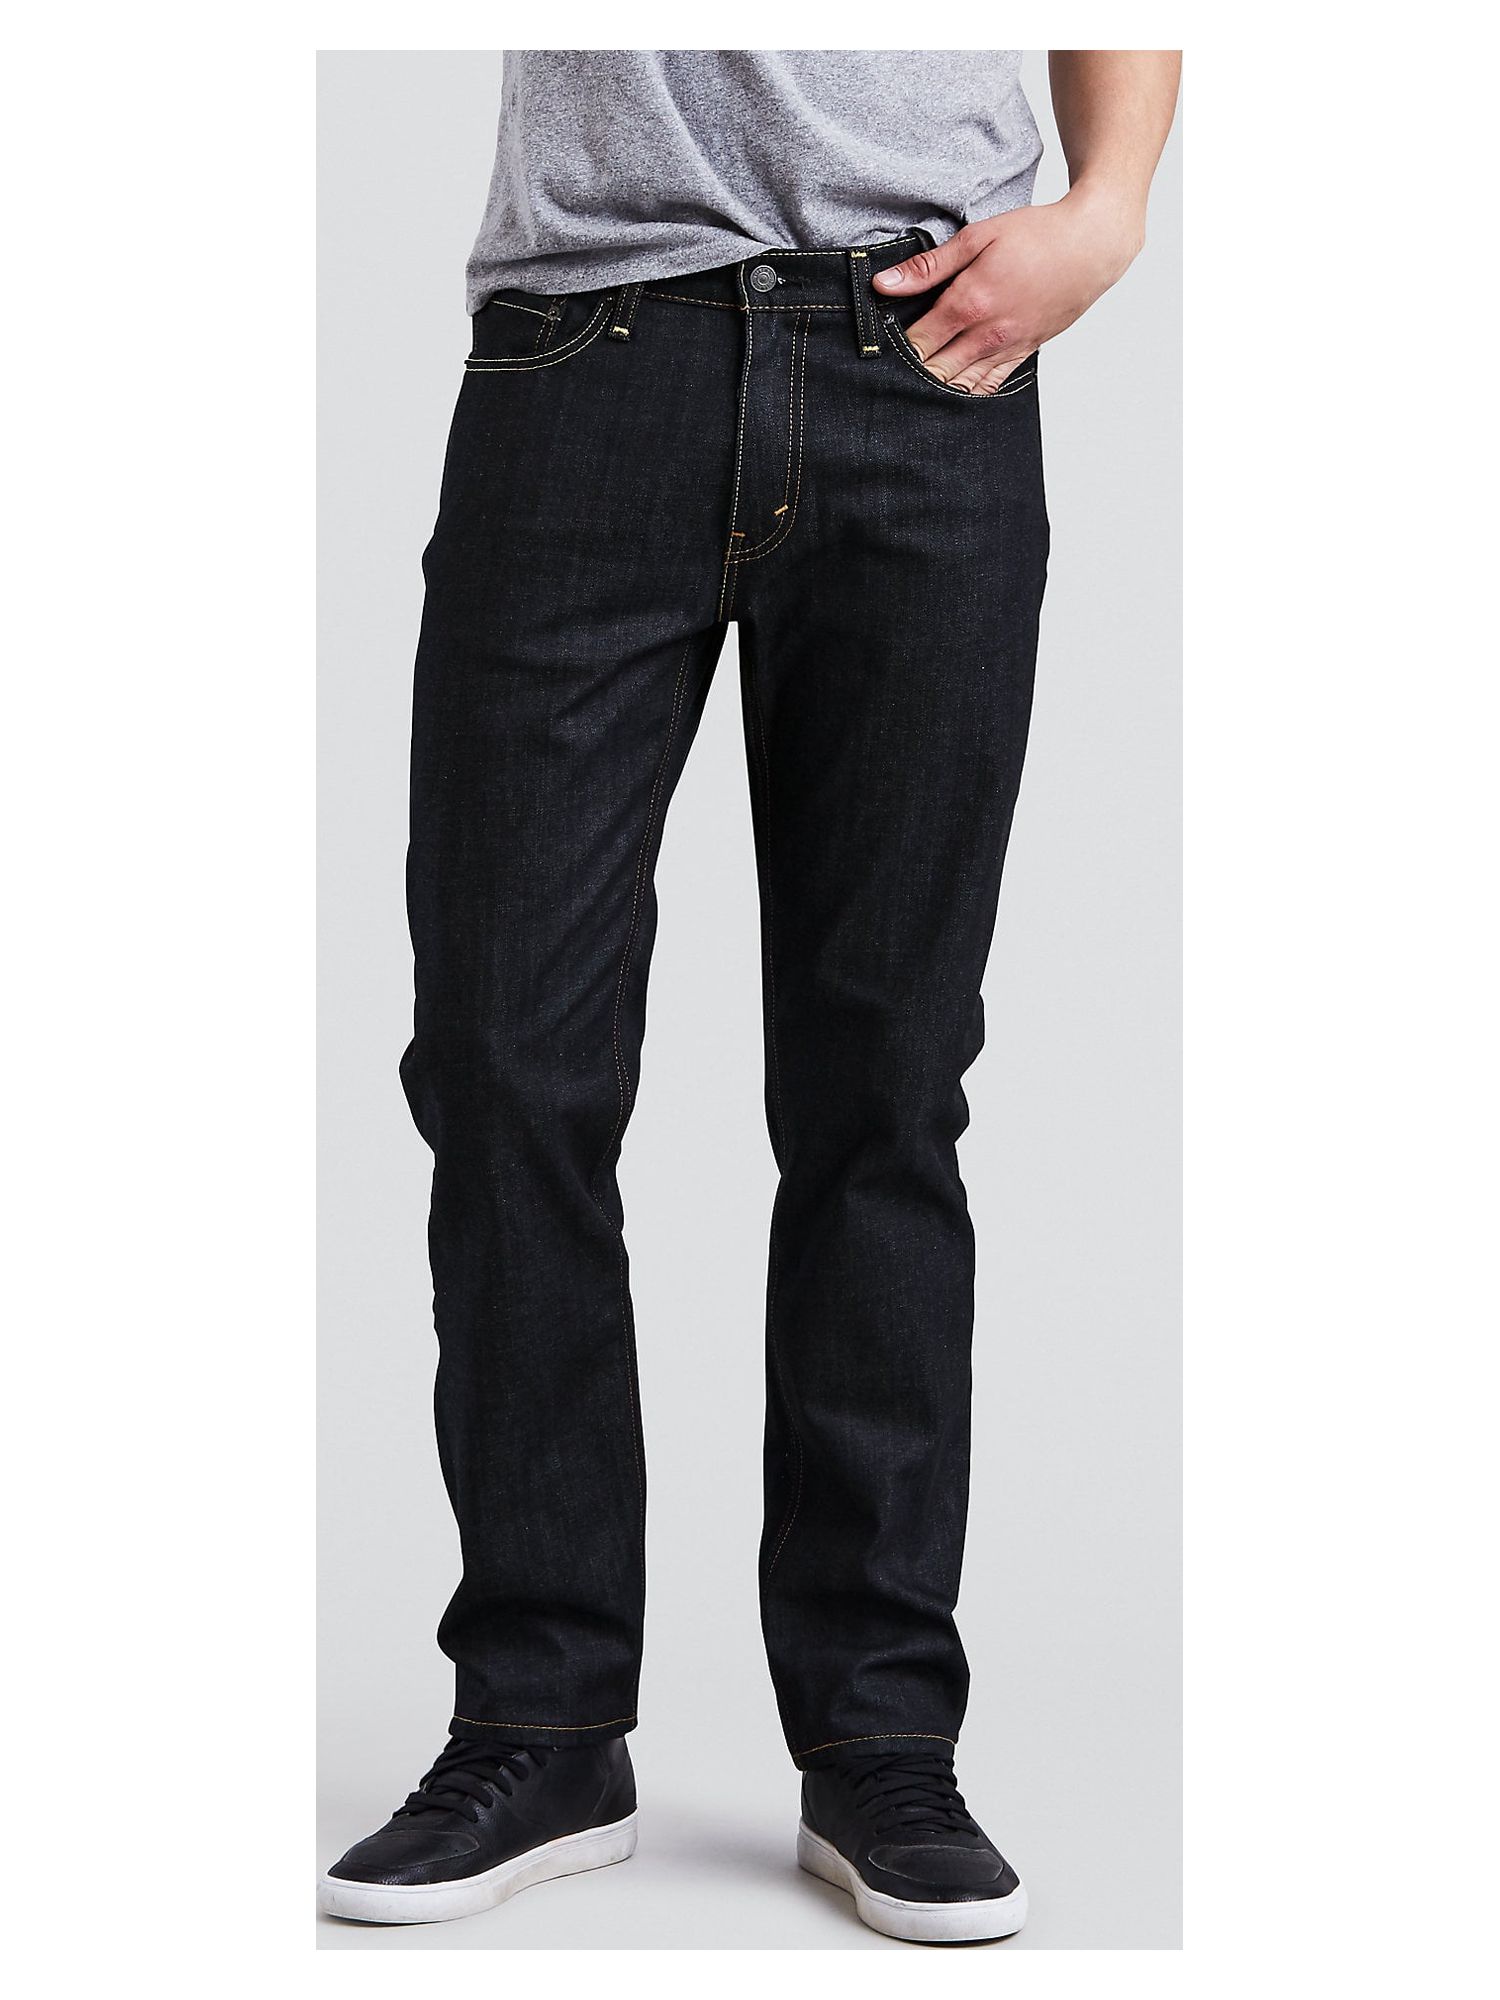 Levi's Men's 541 Athletic Fit Taper Jeans - image 1 of 8